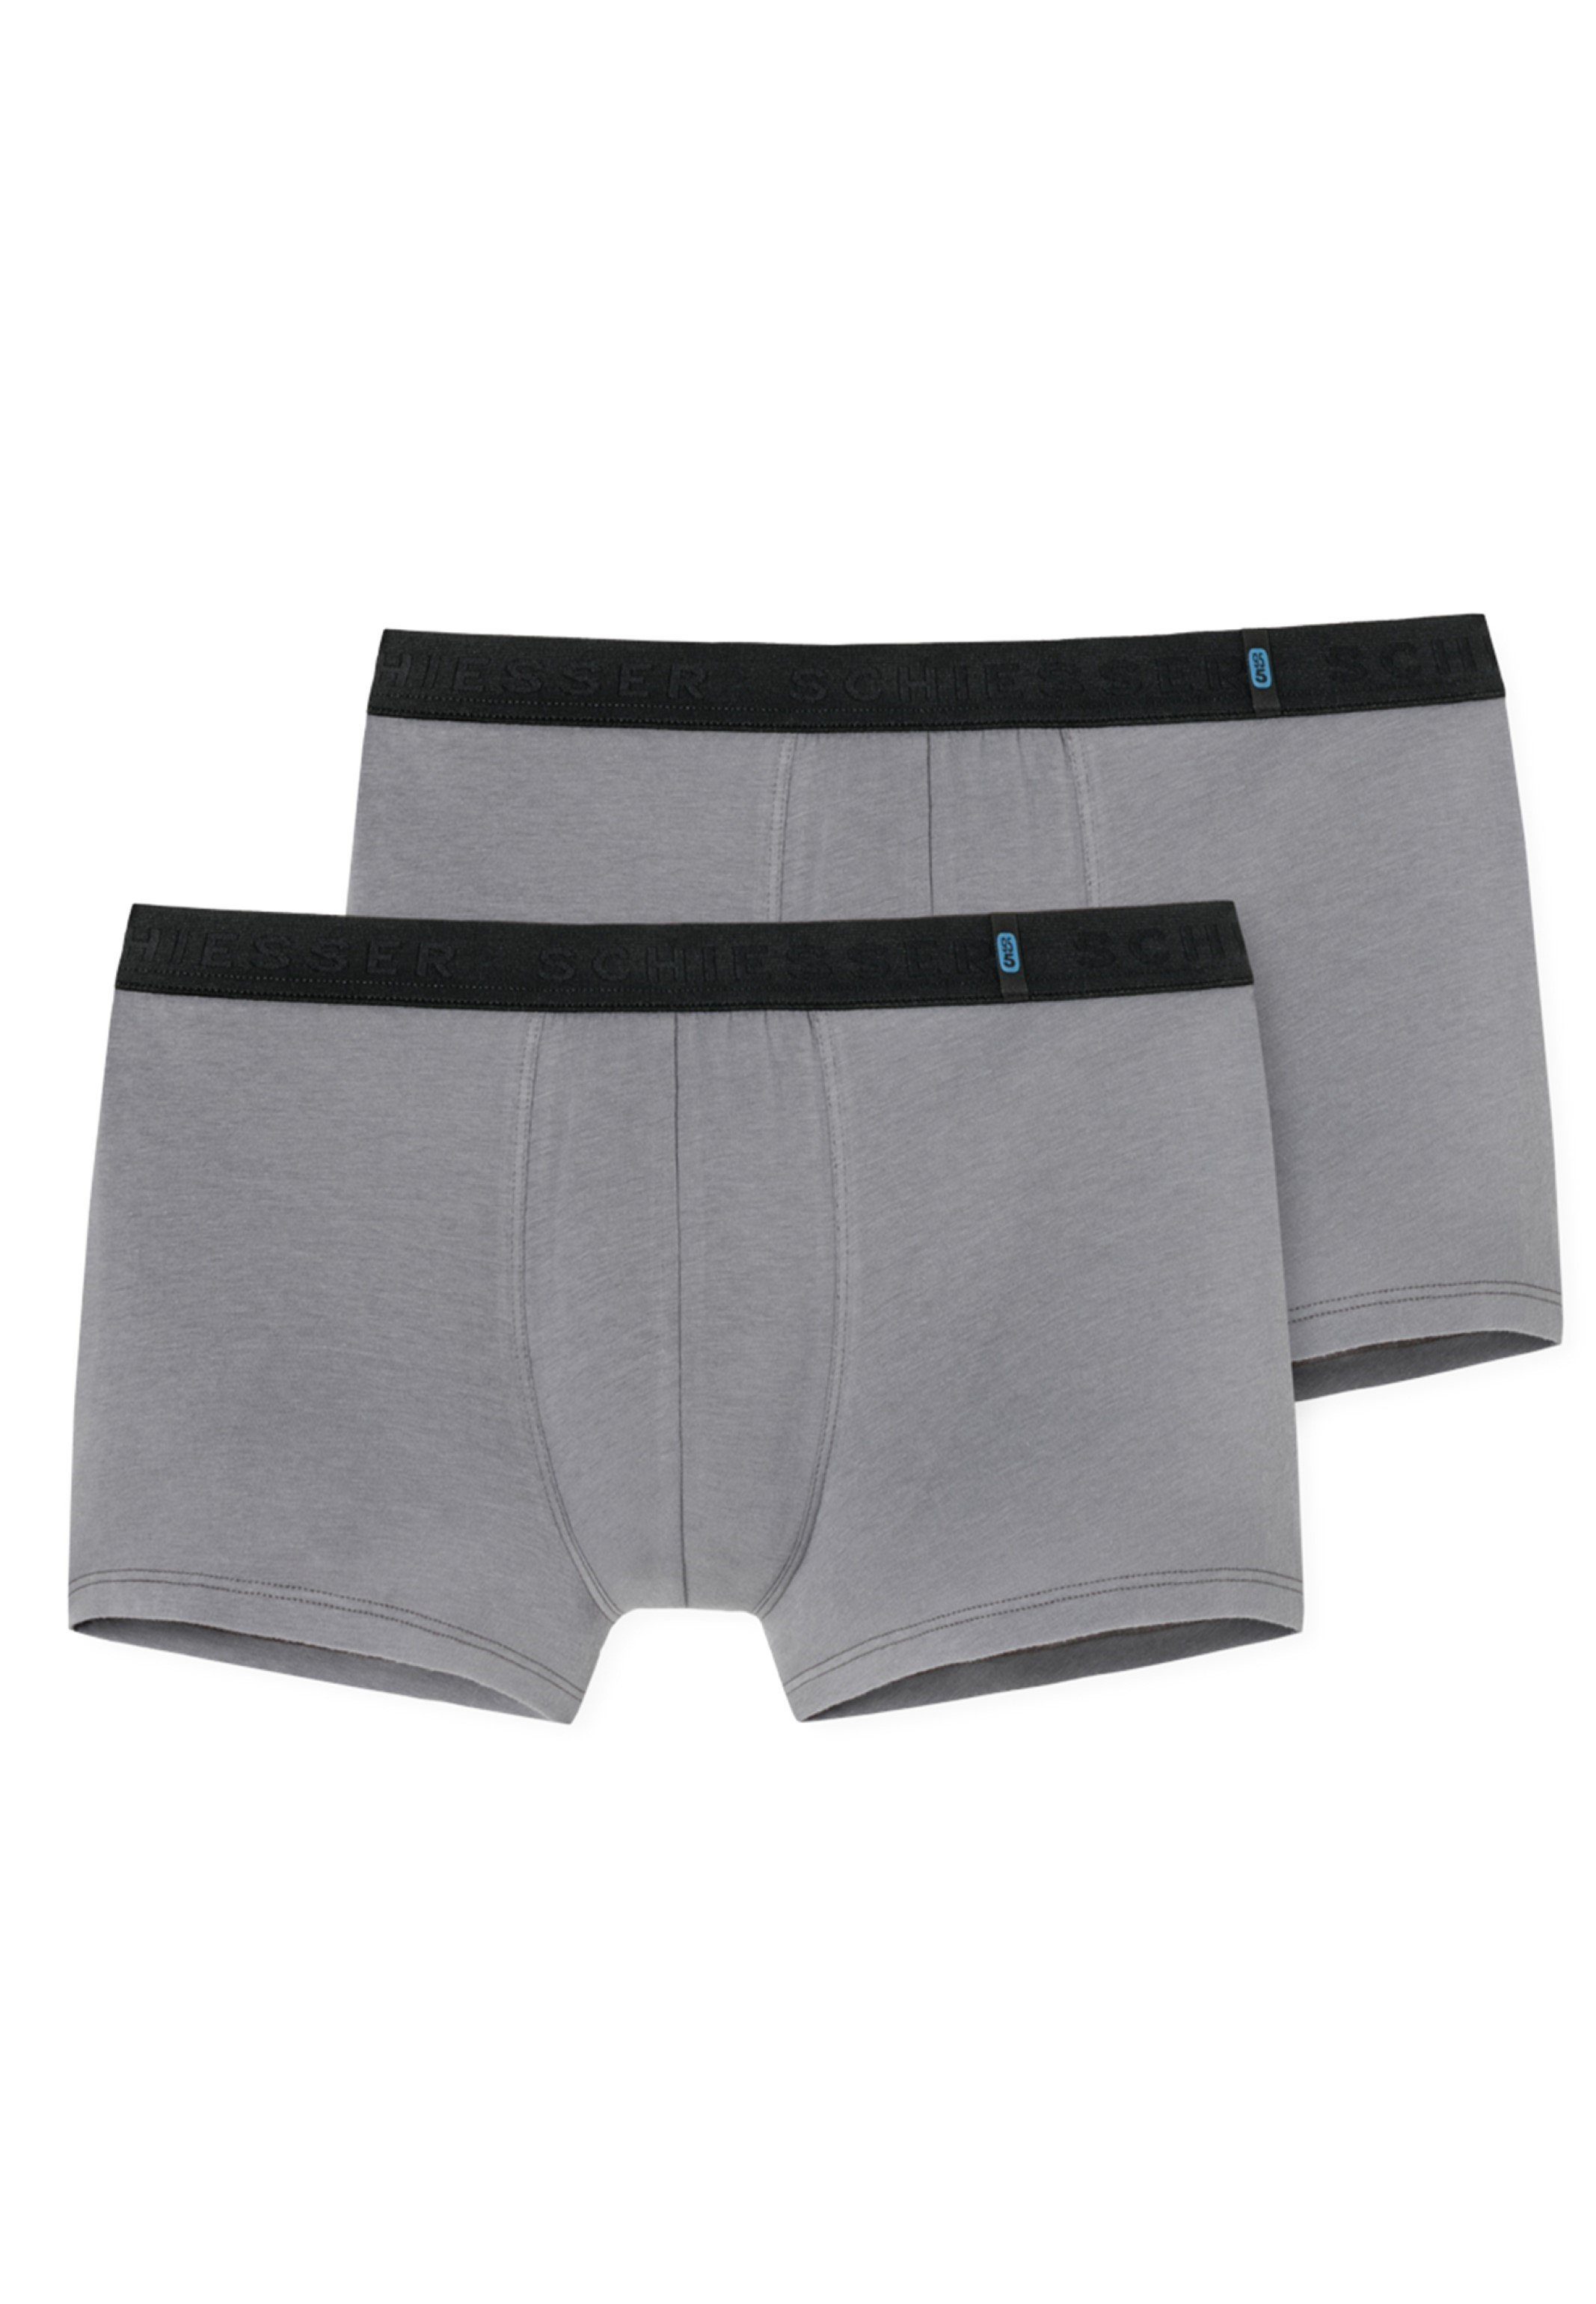 SCHIESSER Jungen Shorts Pant Web-Boxershorts Unterhosen rot multi NEU*UVP 9,95 